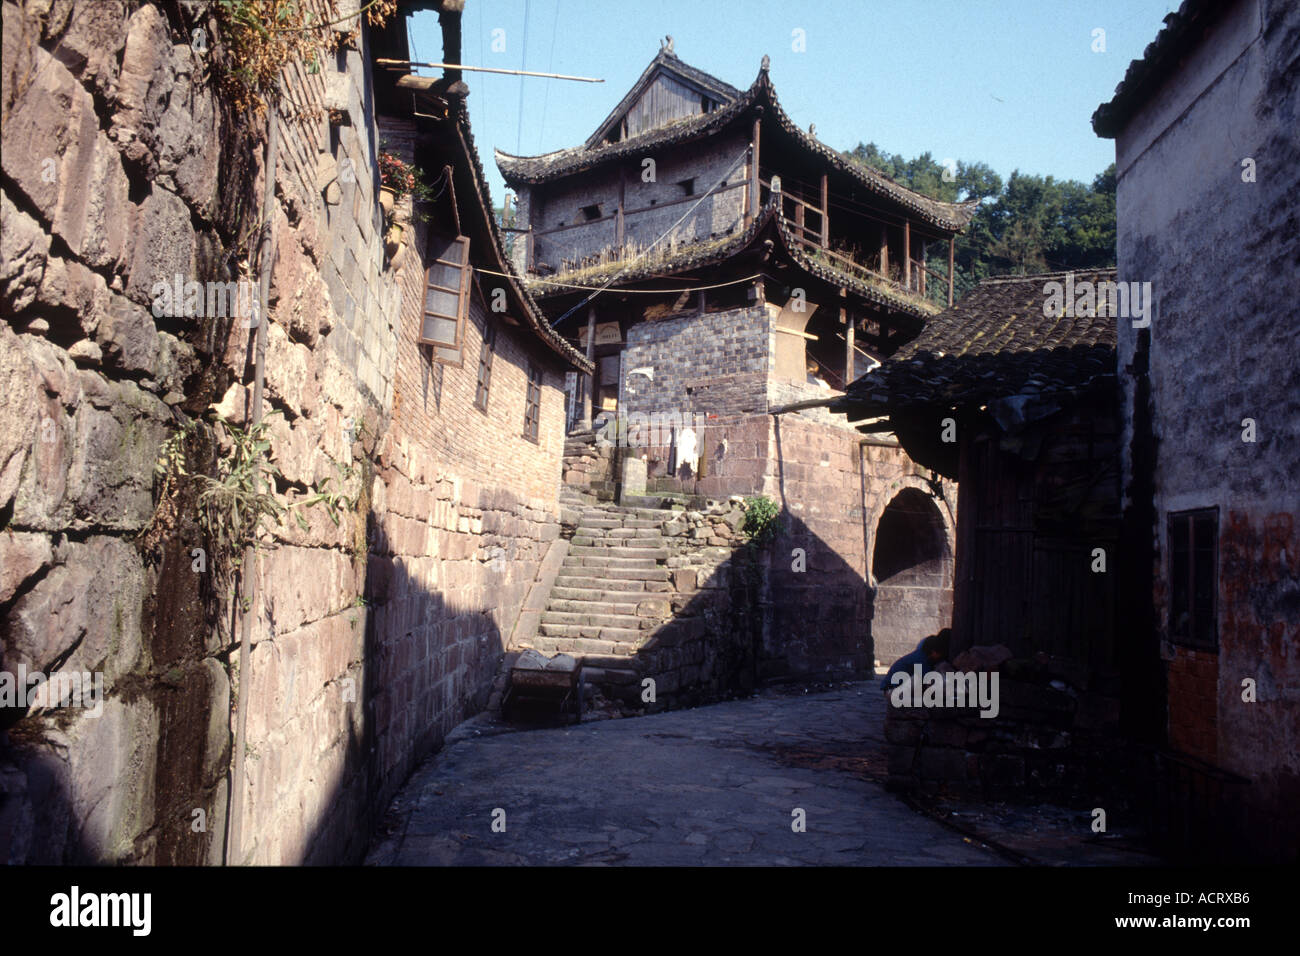 A view of the Fengwang old town hometown of the great writer Shen Congwen Hunan China Stock Photo